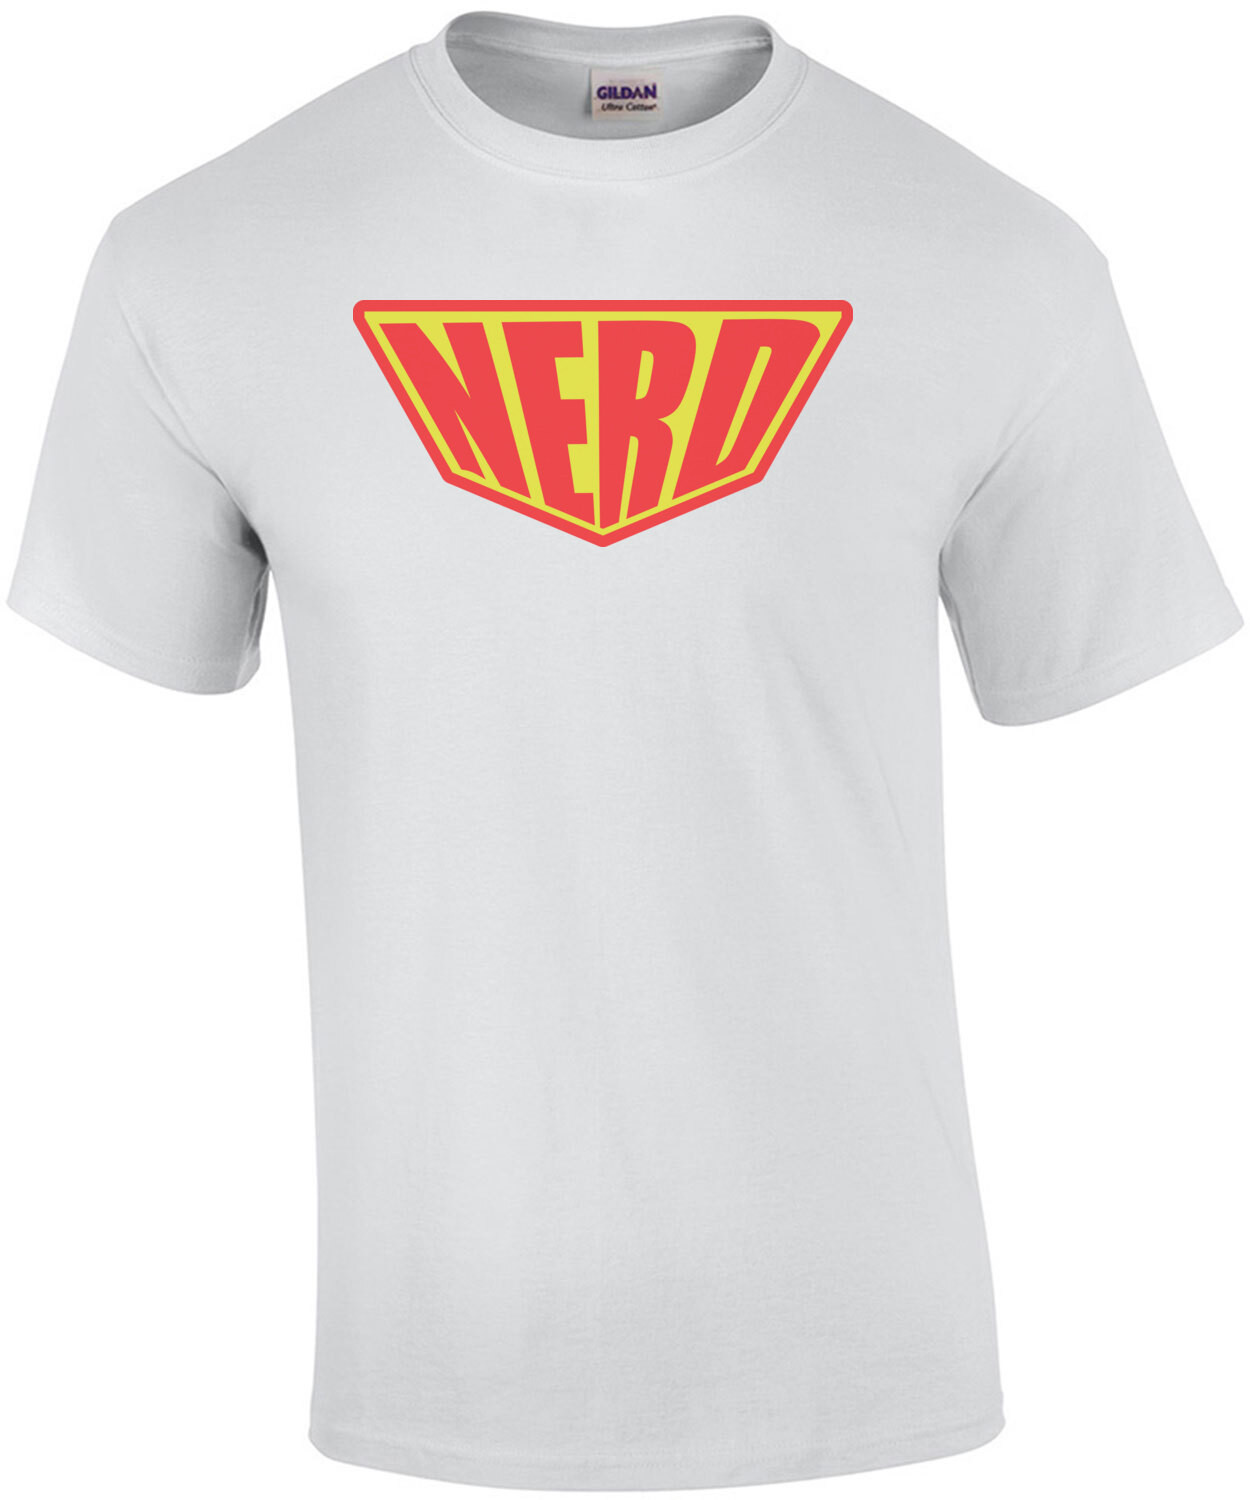 SUPER NERD - Superman Style Logo